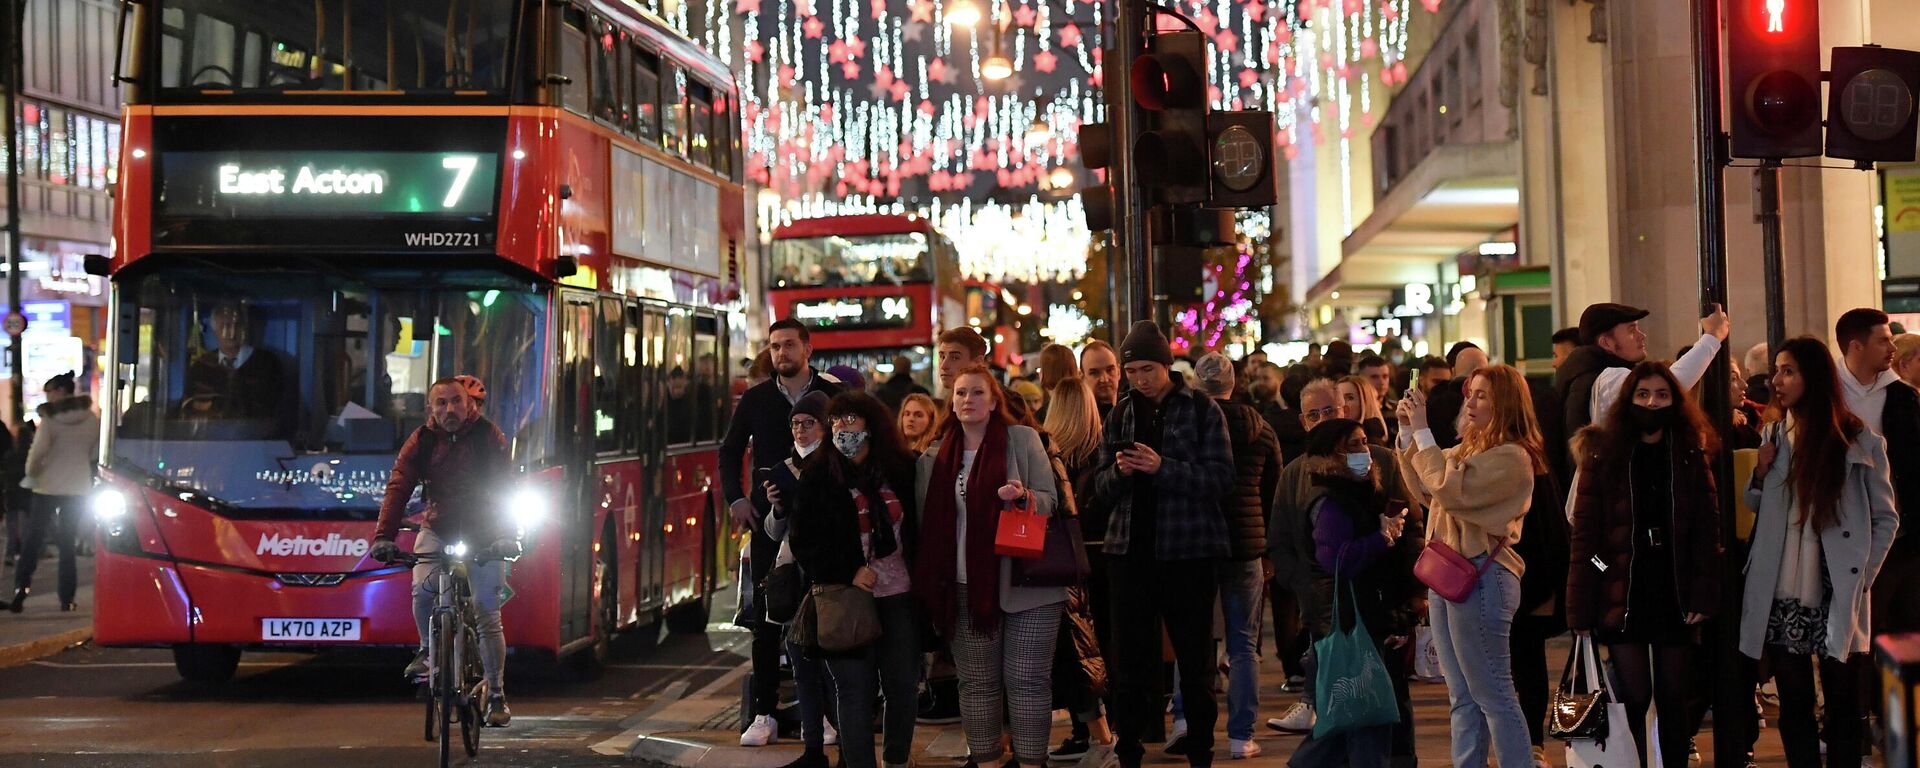 Bus passengers and shoppers view a Christmas light display along Oxford Street, London, Britain, November 20, 2021 - Sputnik International, 1920, 18.12.2021